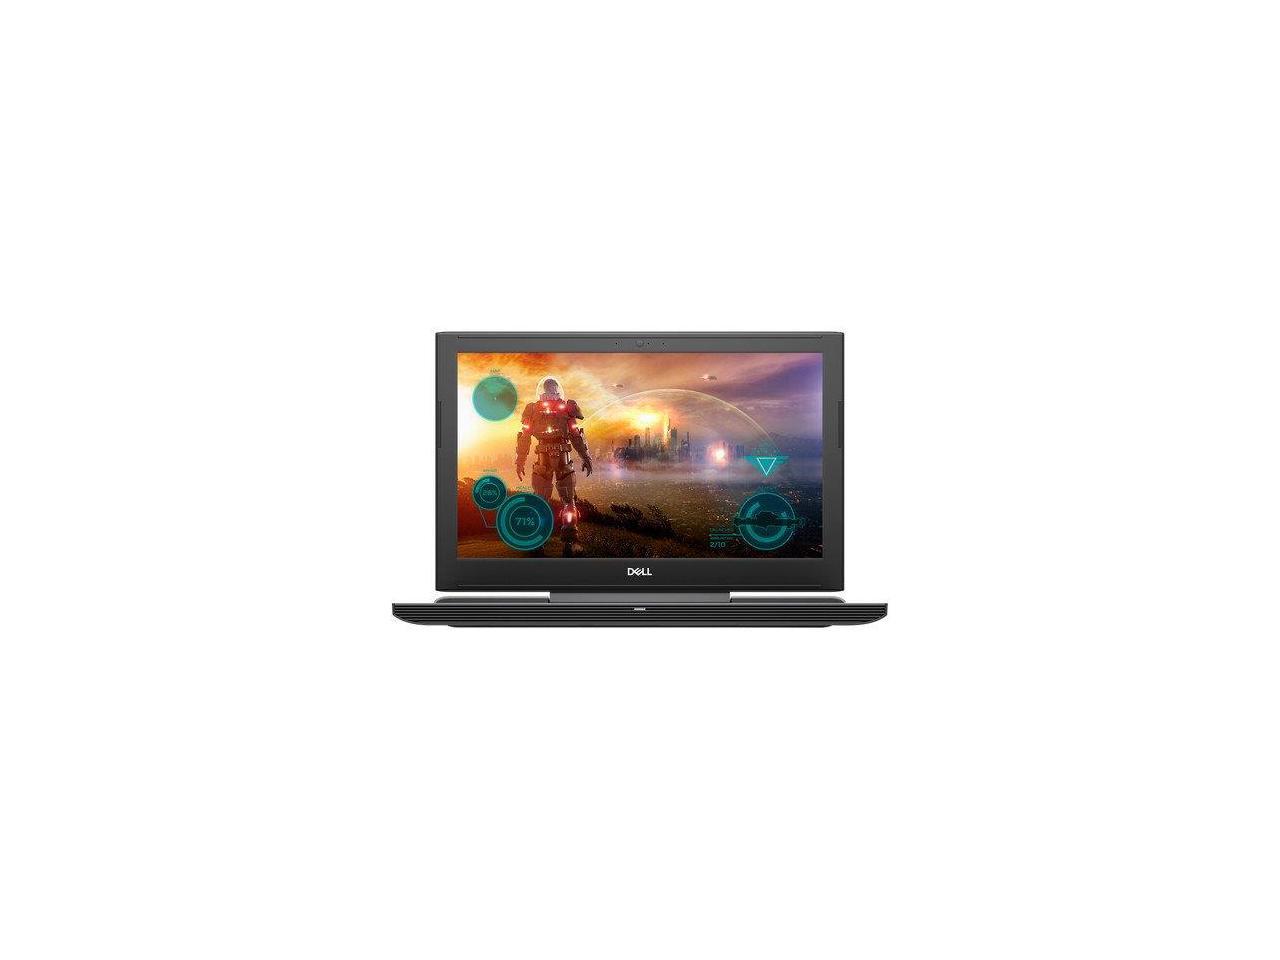 Dell Inspiron 7000 15.6" IPS FHD Gaming Laptop | VR Ready | Intel Quad Core i5-7300HQ | 16GB RAM 256GB SSD | NVIDIA GeForce GTX 1060 6GB GDDR5 | Windows 10 Black